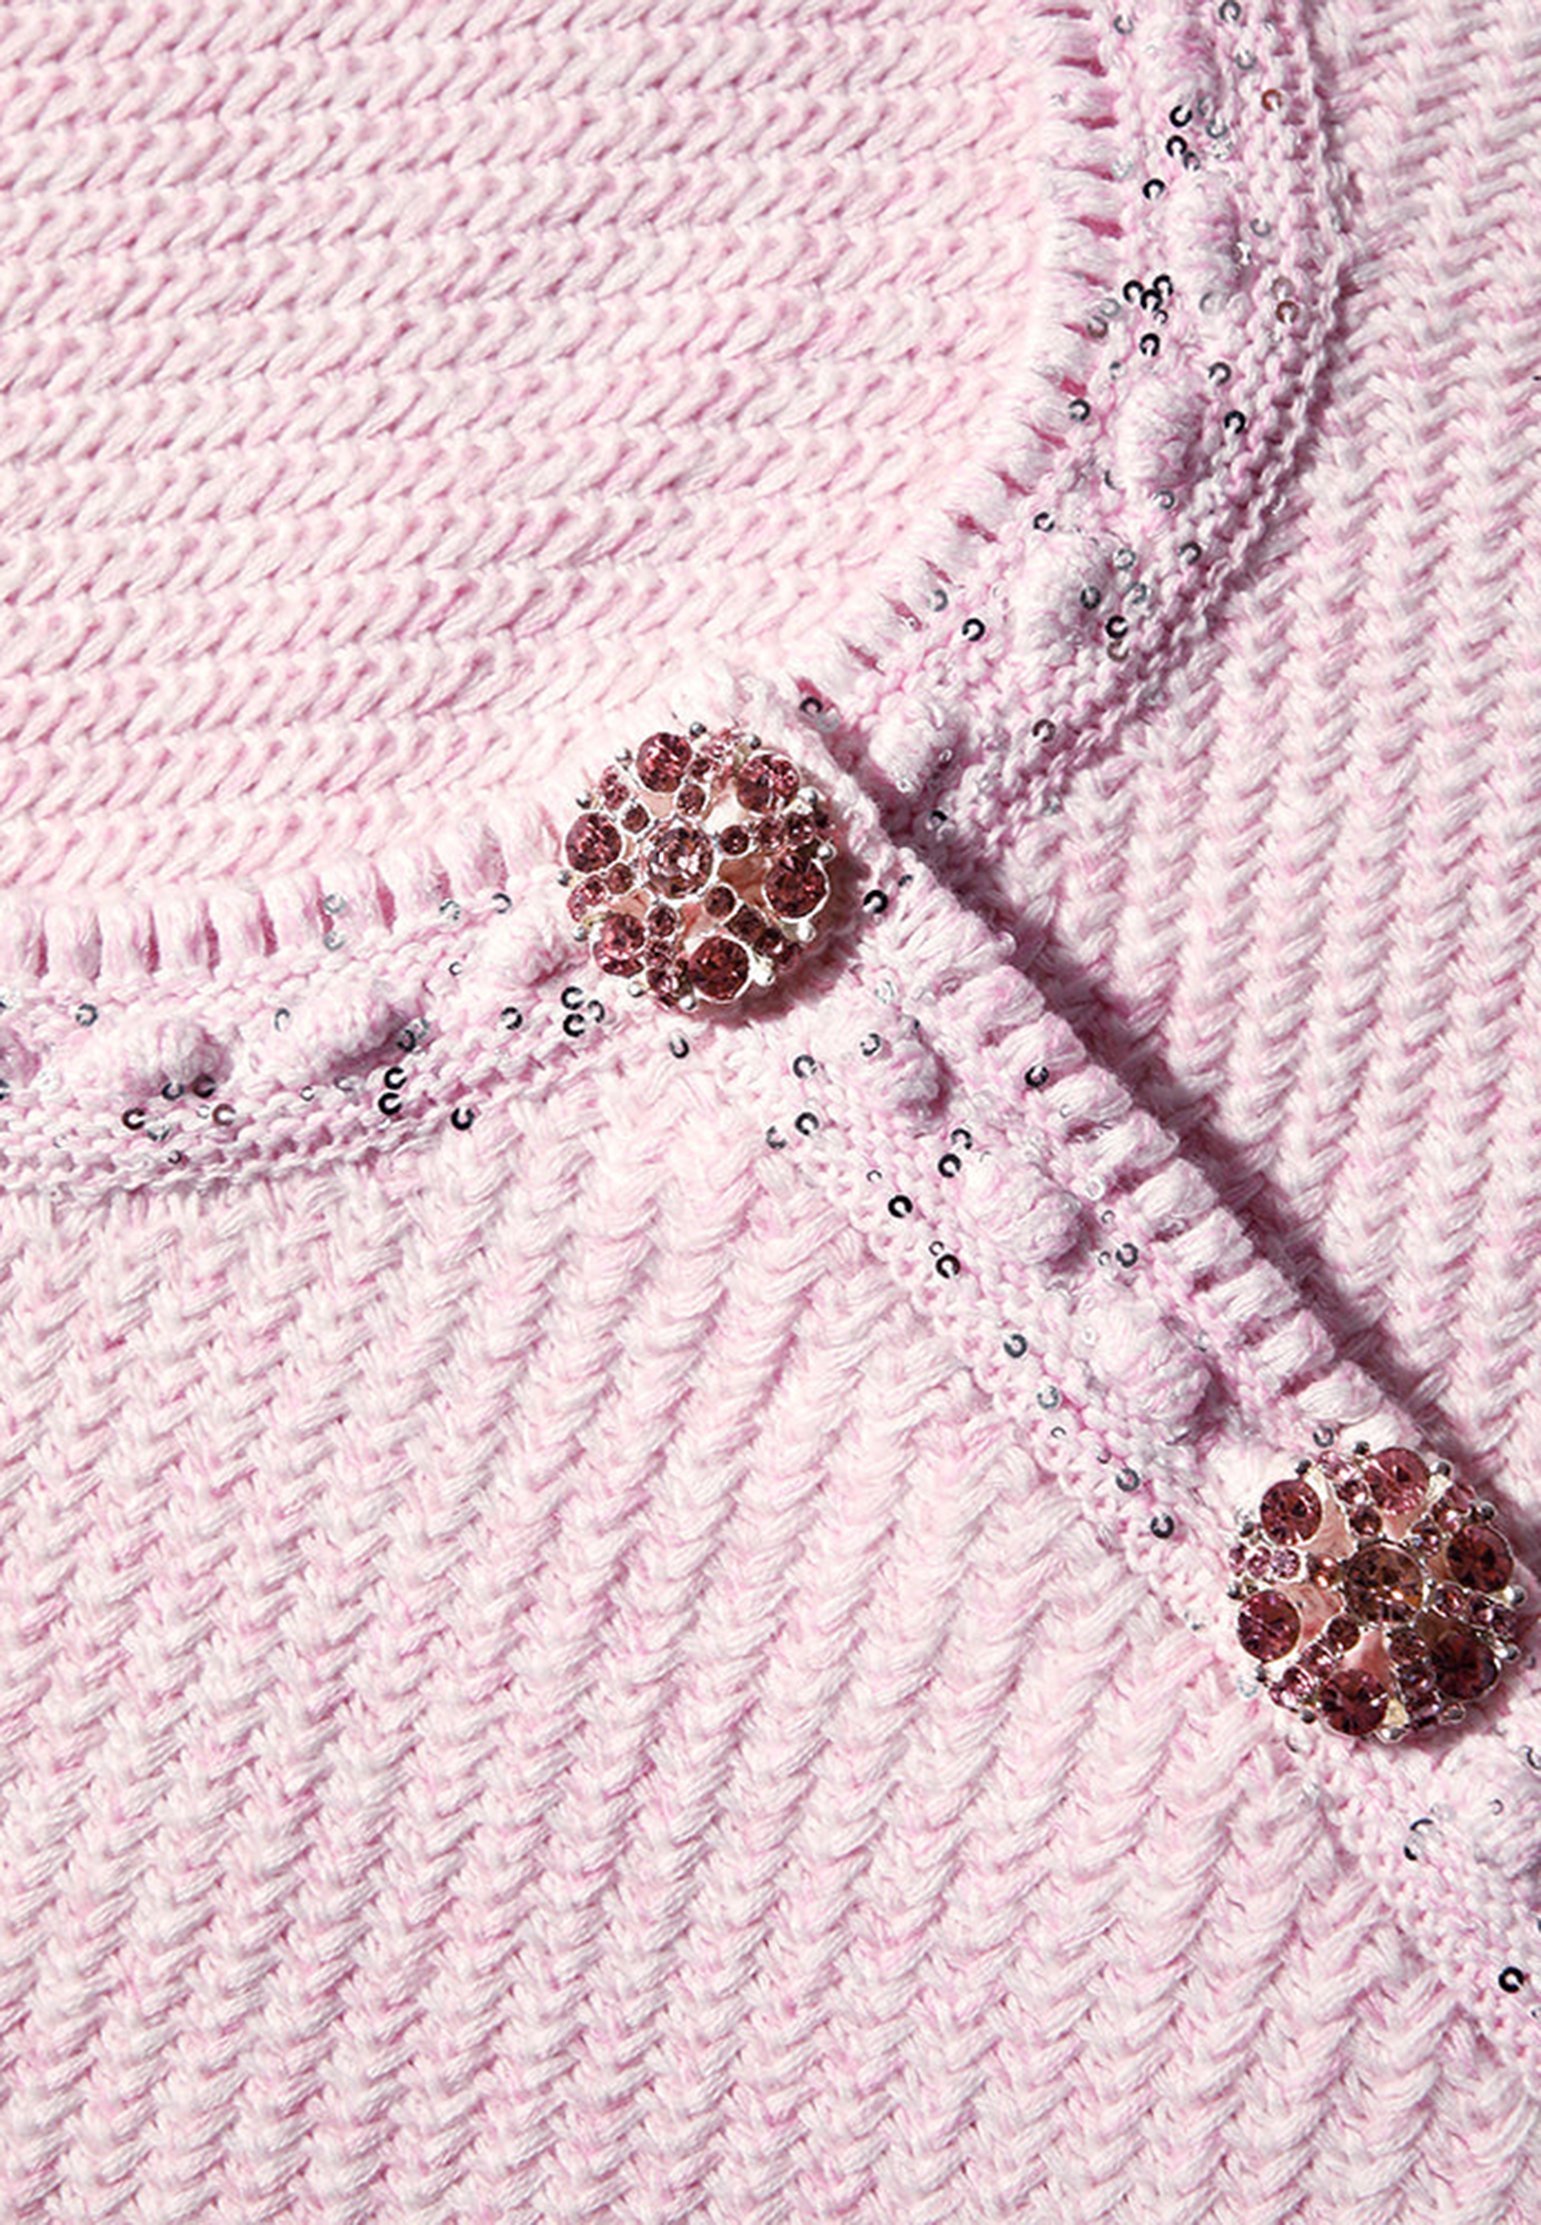 Cardigan SELF-PORTRAIT Color: pink (Code: 2246) in online store Allure